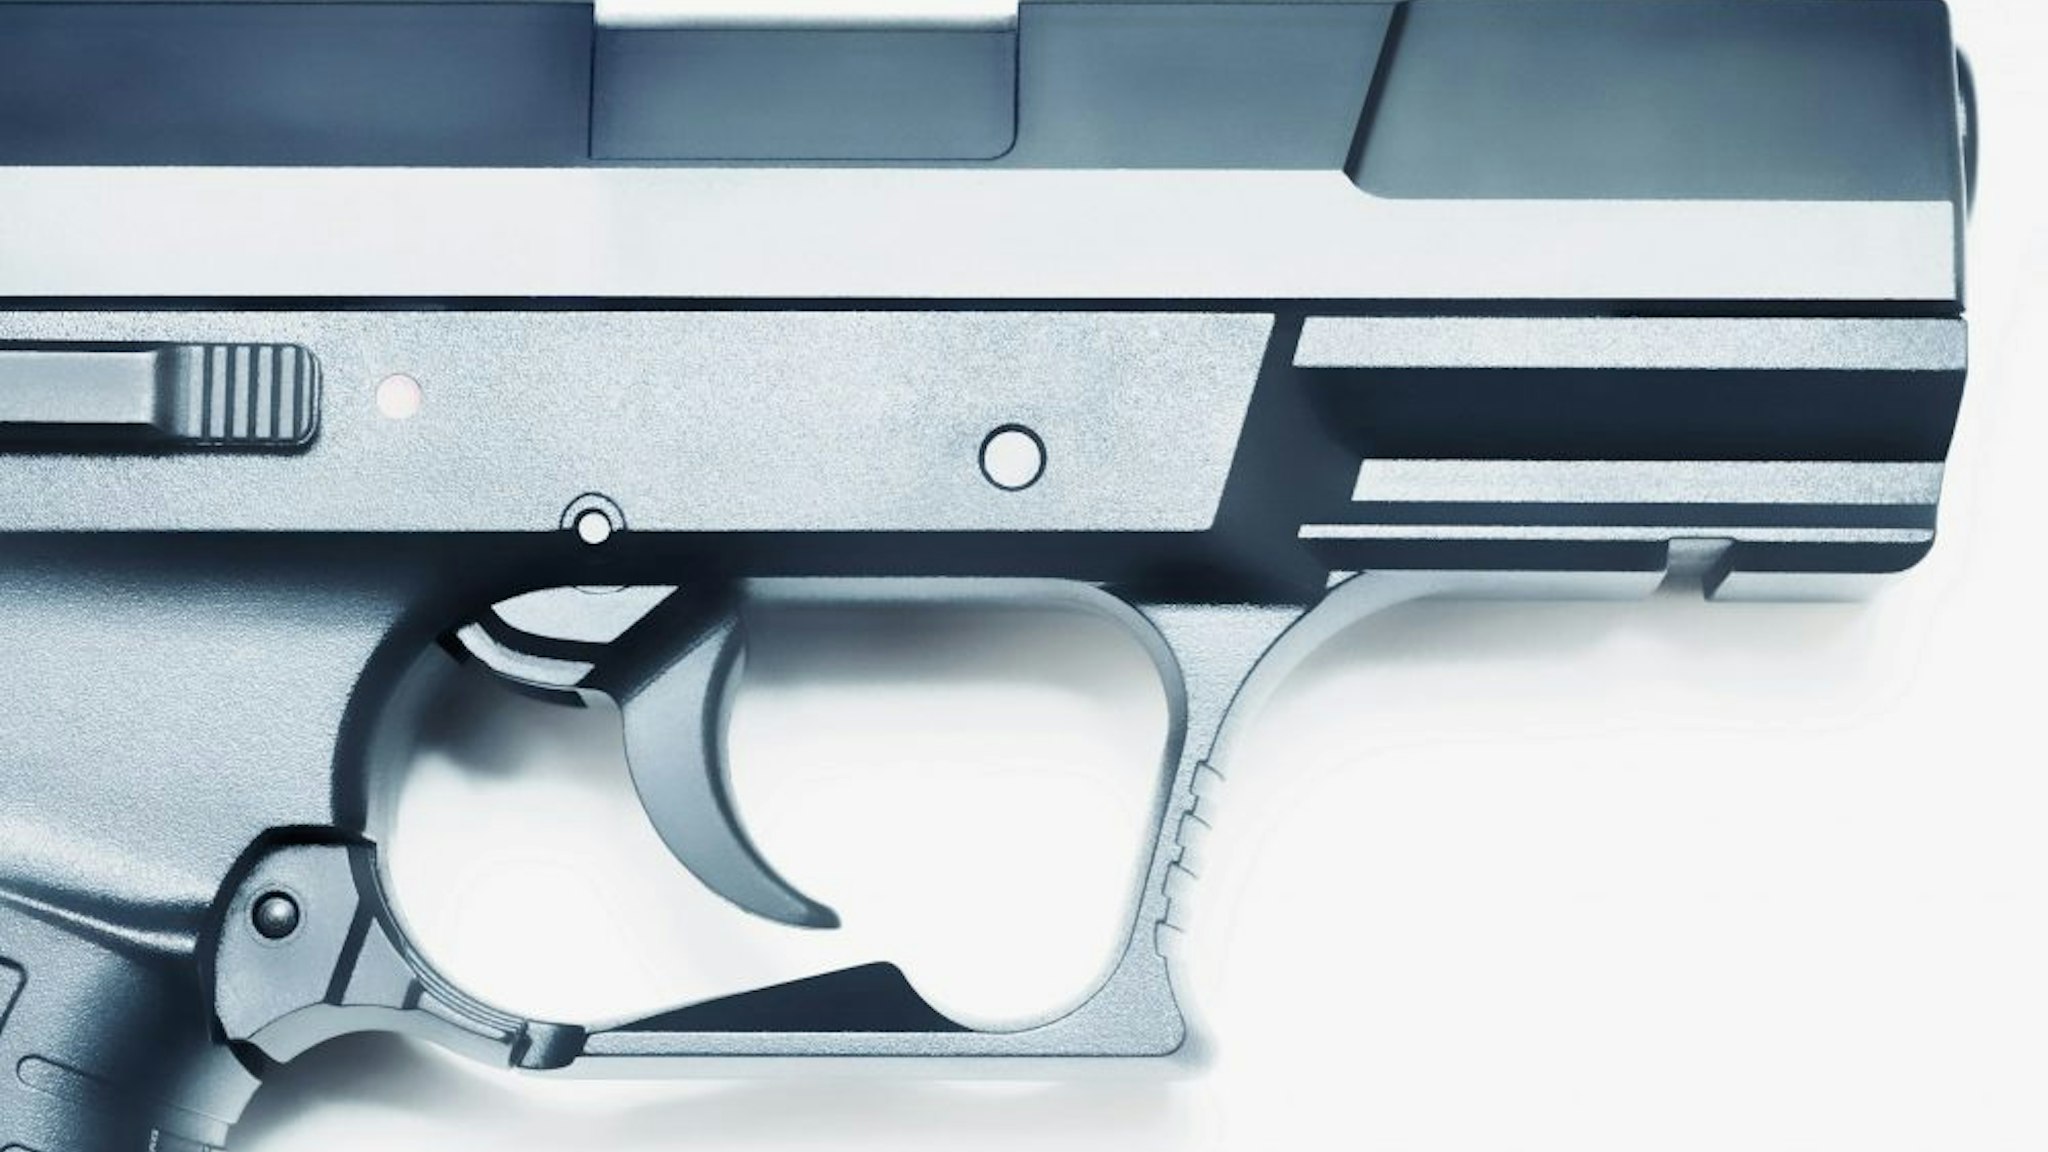 Close-up of trigger and barrel of a handgun